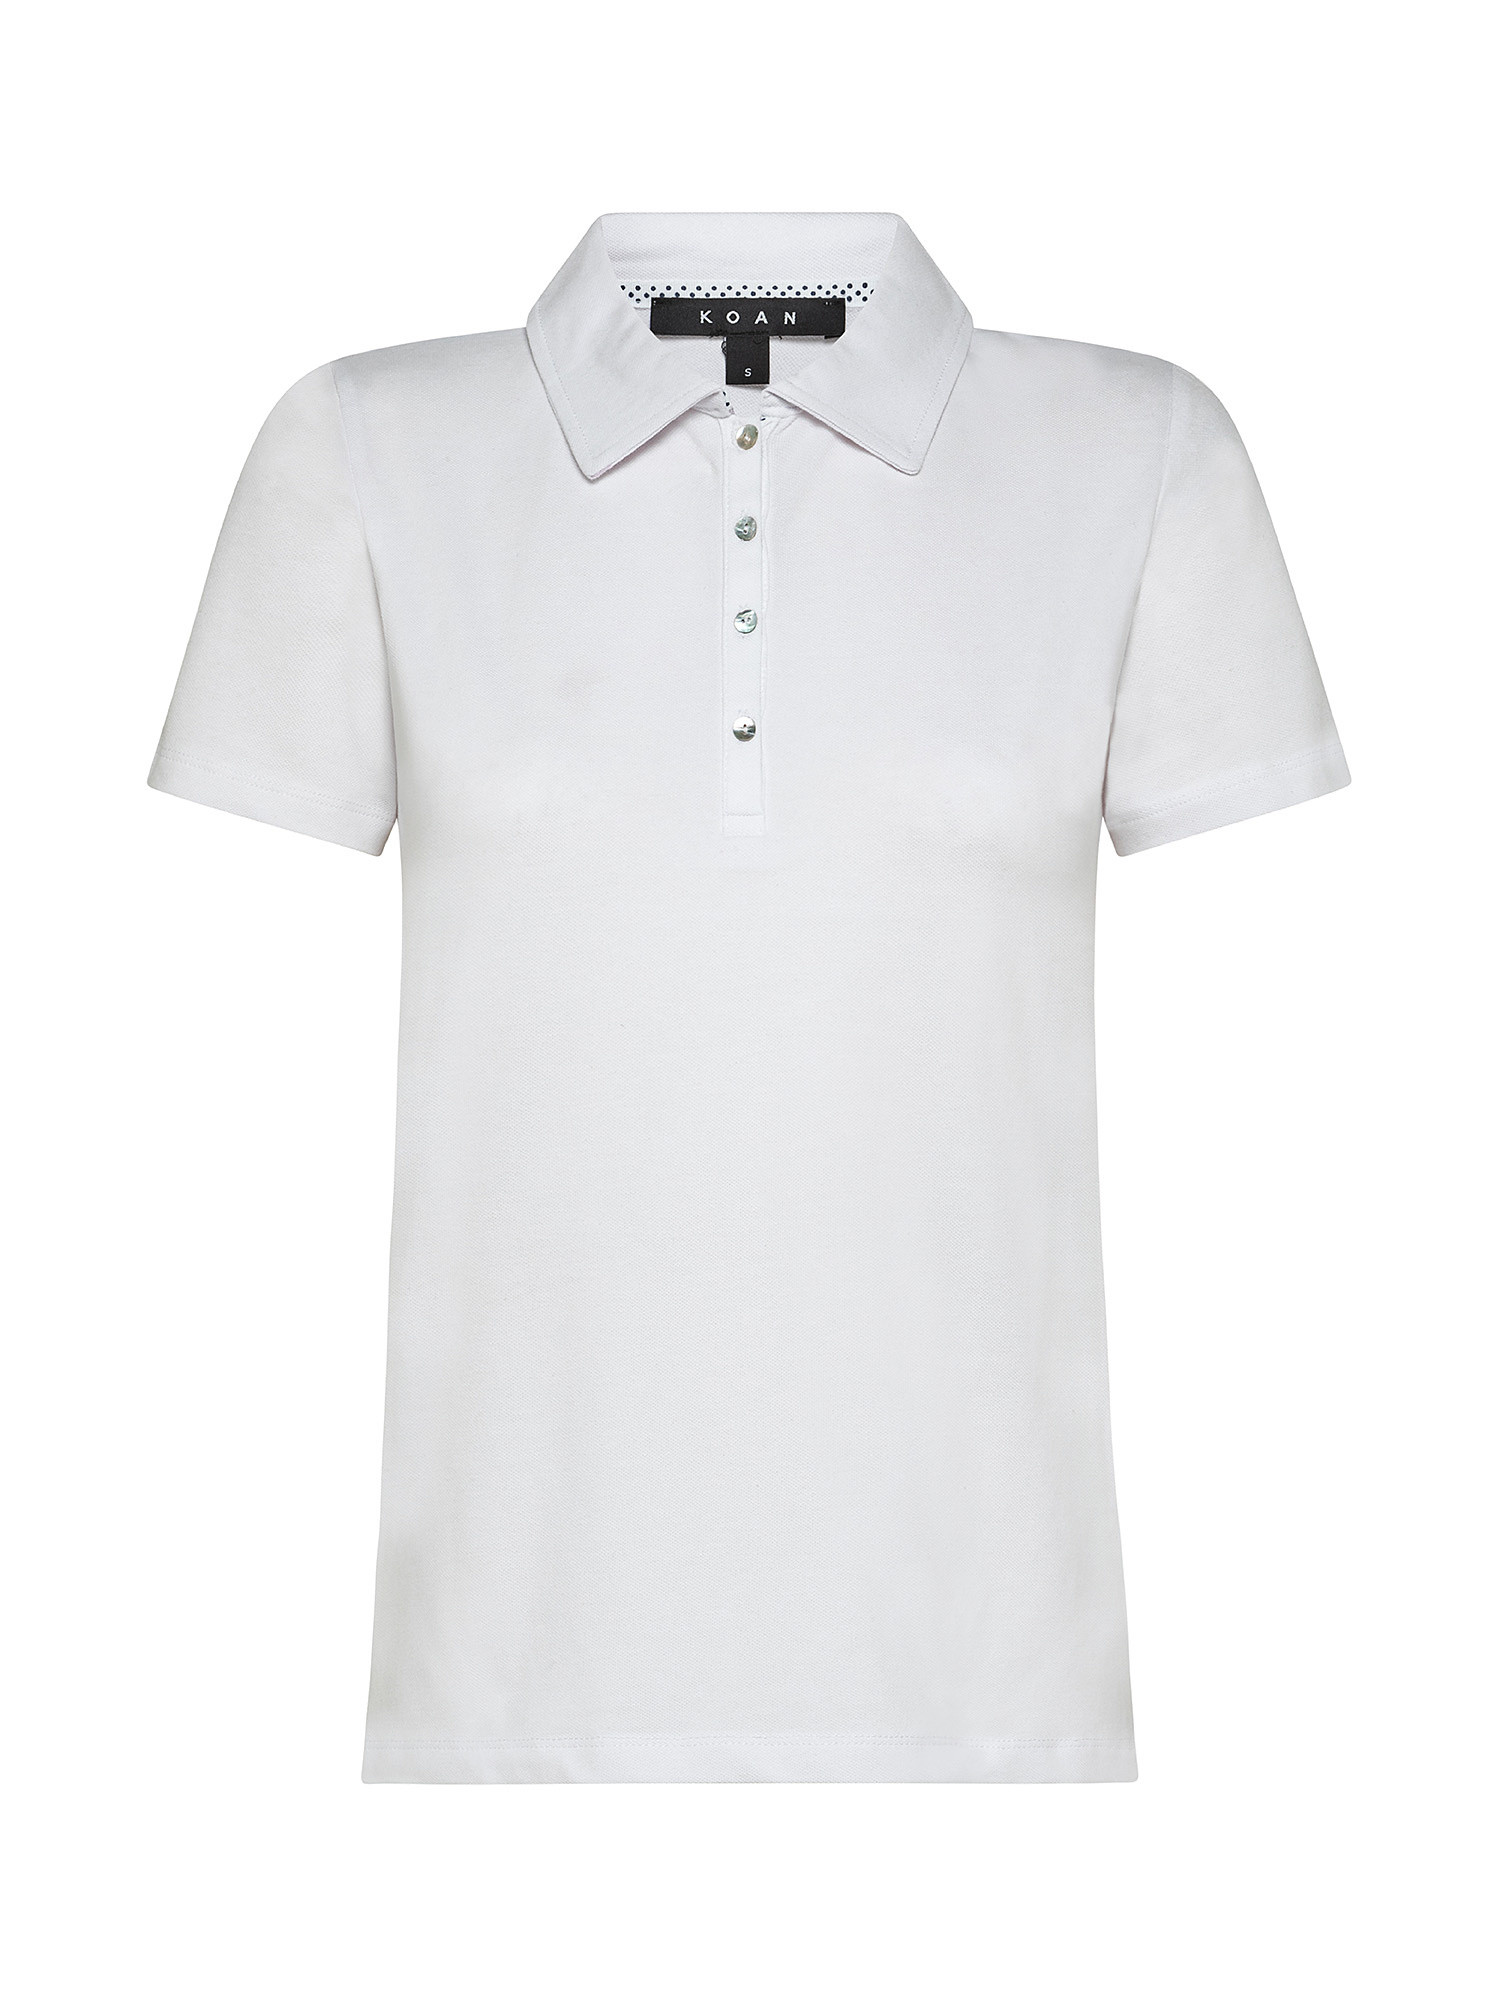 T-shirt with rhinestones, White, large image number 0